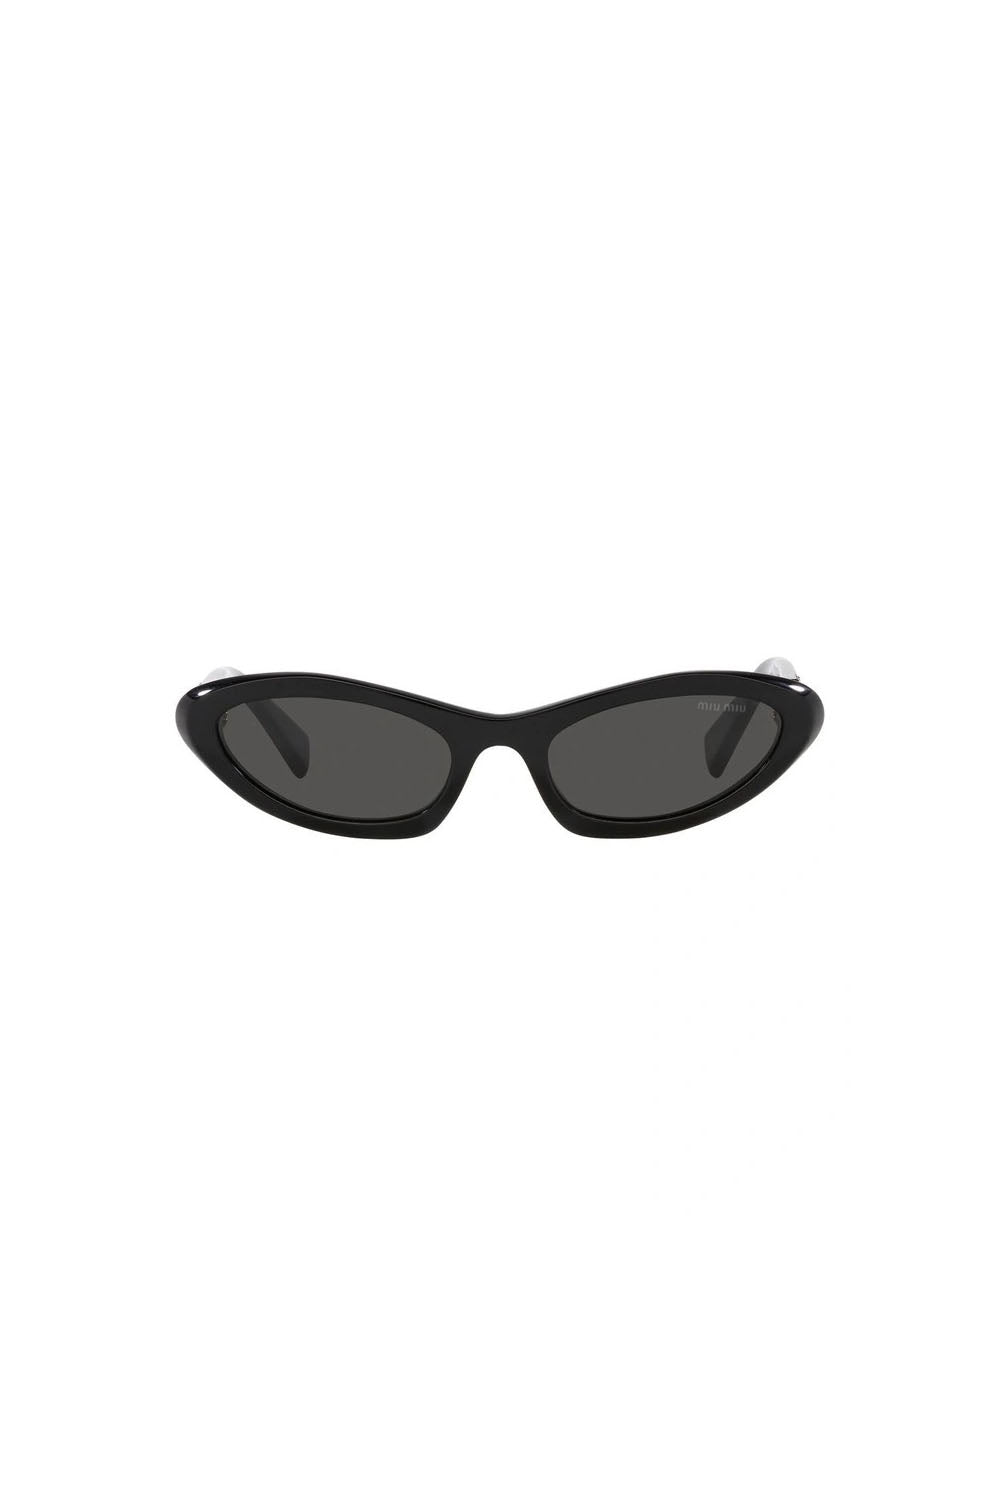 Miu Miu Sunglasses MU 09YS Black Dark Grey